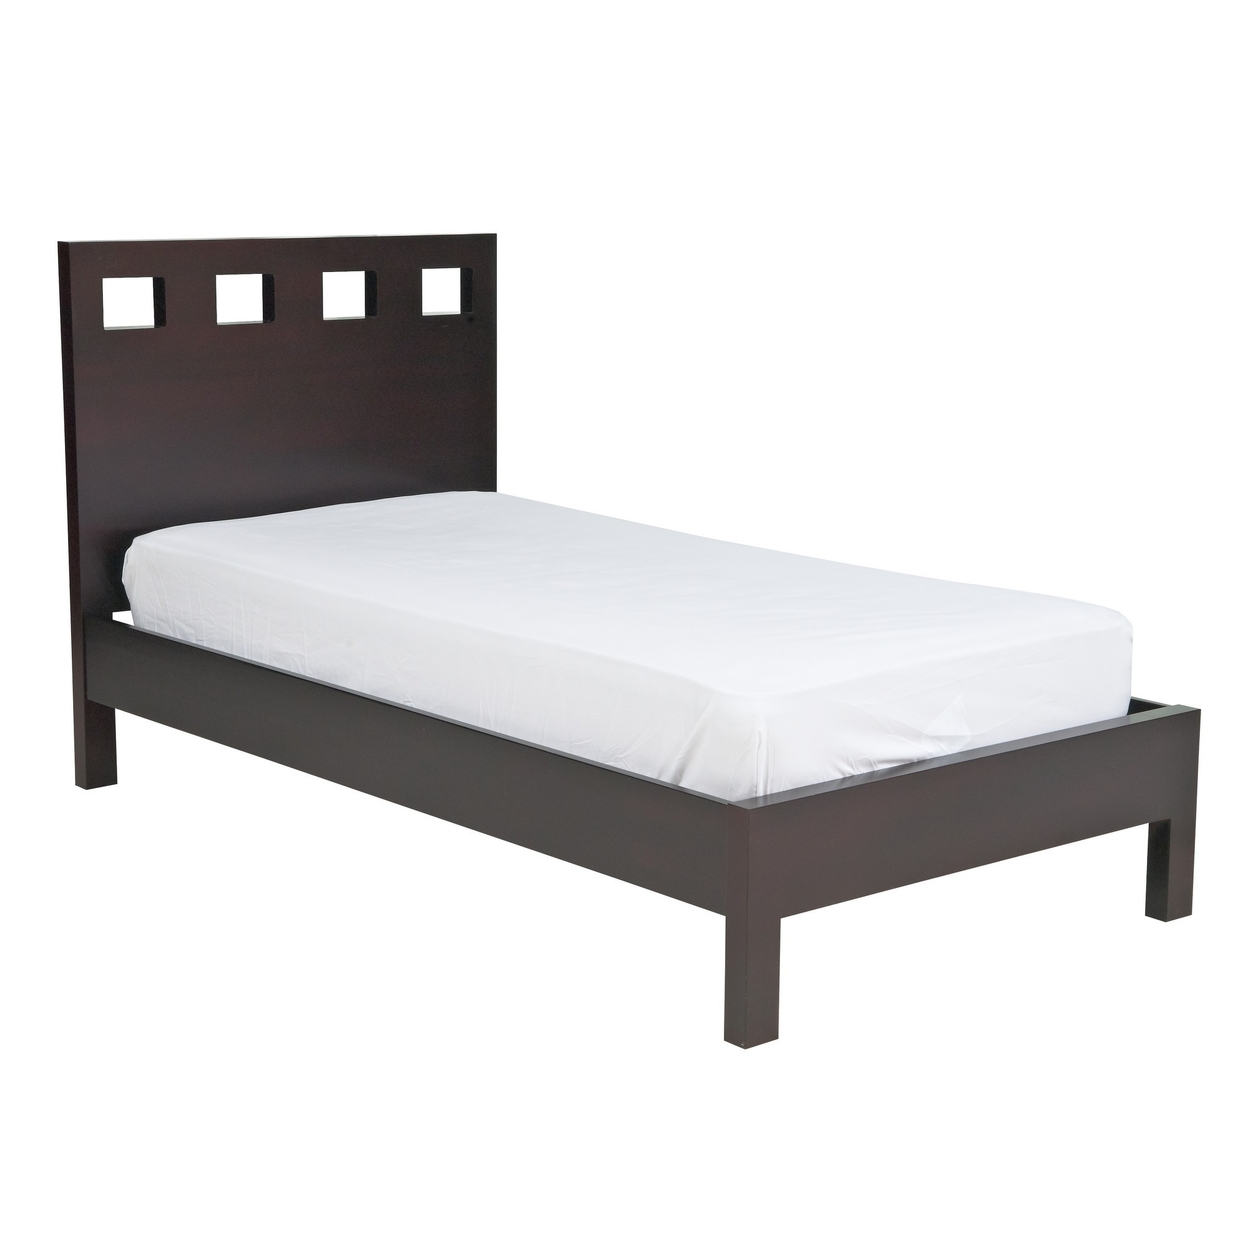 Yee Twin Size Platform Bed, Cut Out Panel Headboard, Espresso Brown Wood- Saltoro Sherpi